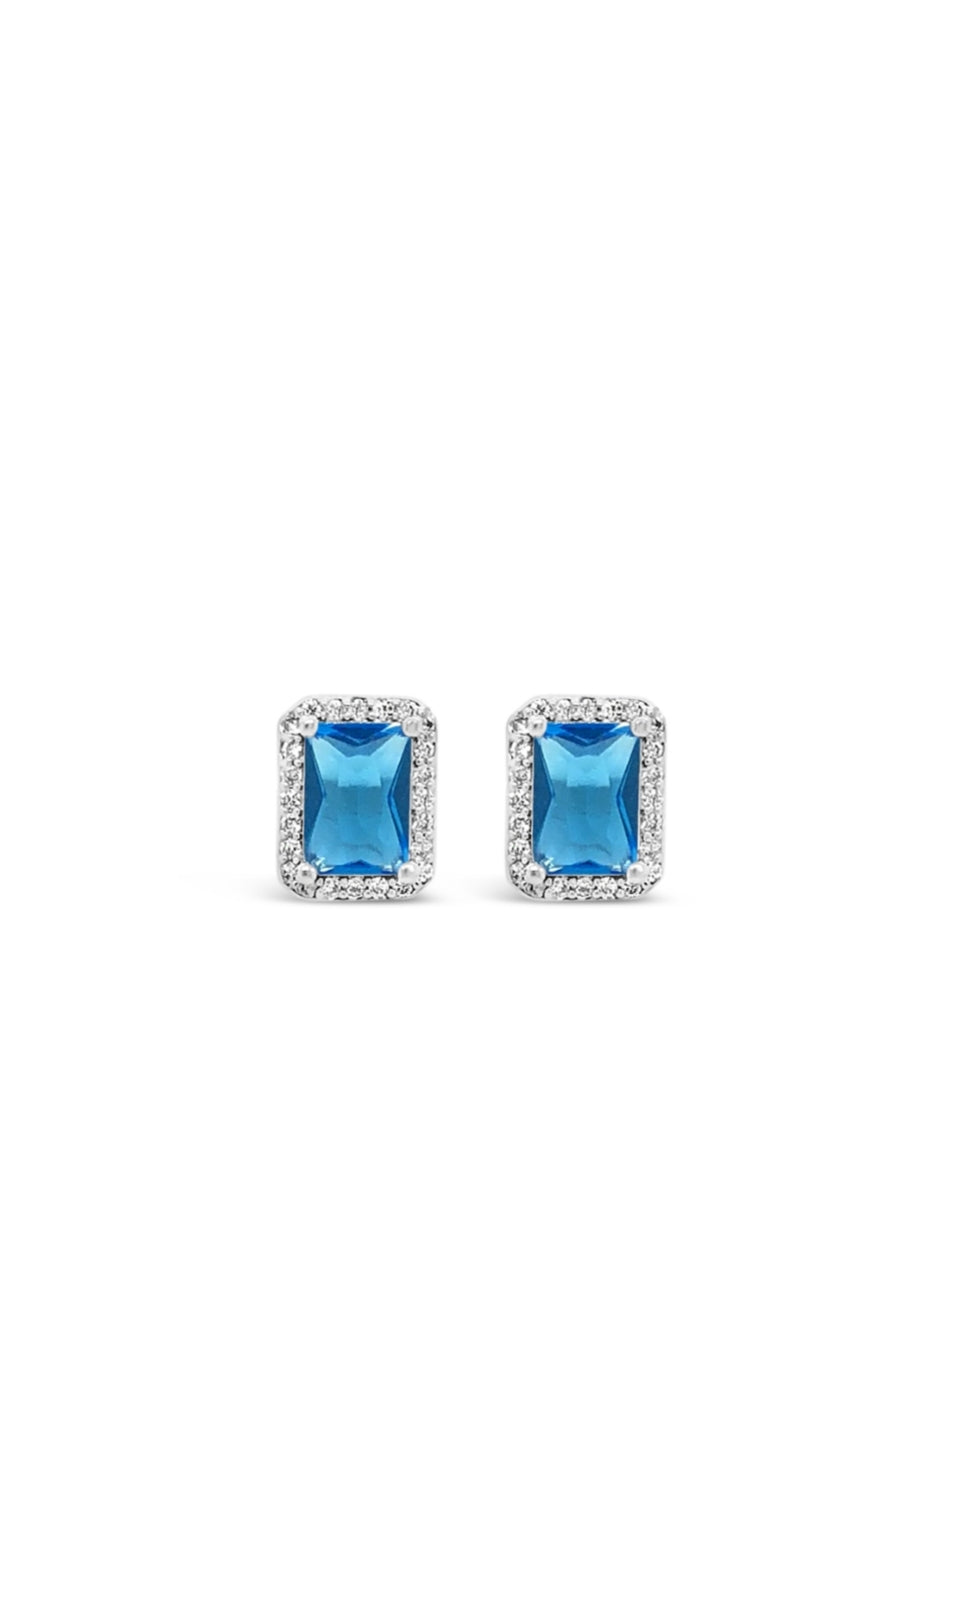 Aqua Blue Crystal Rectangular Stud Earrings